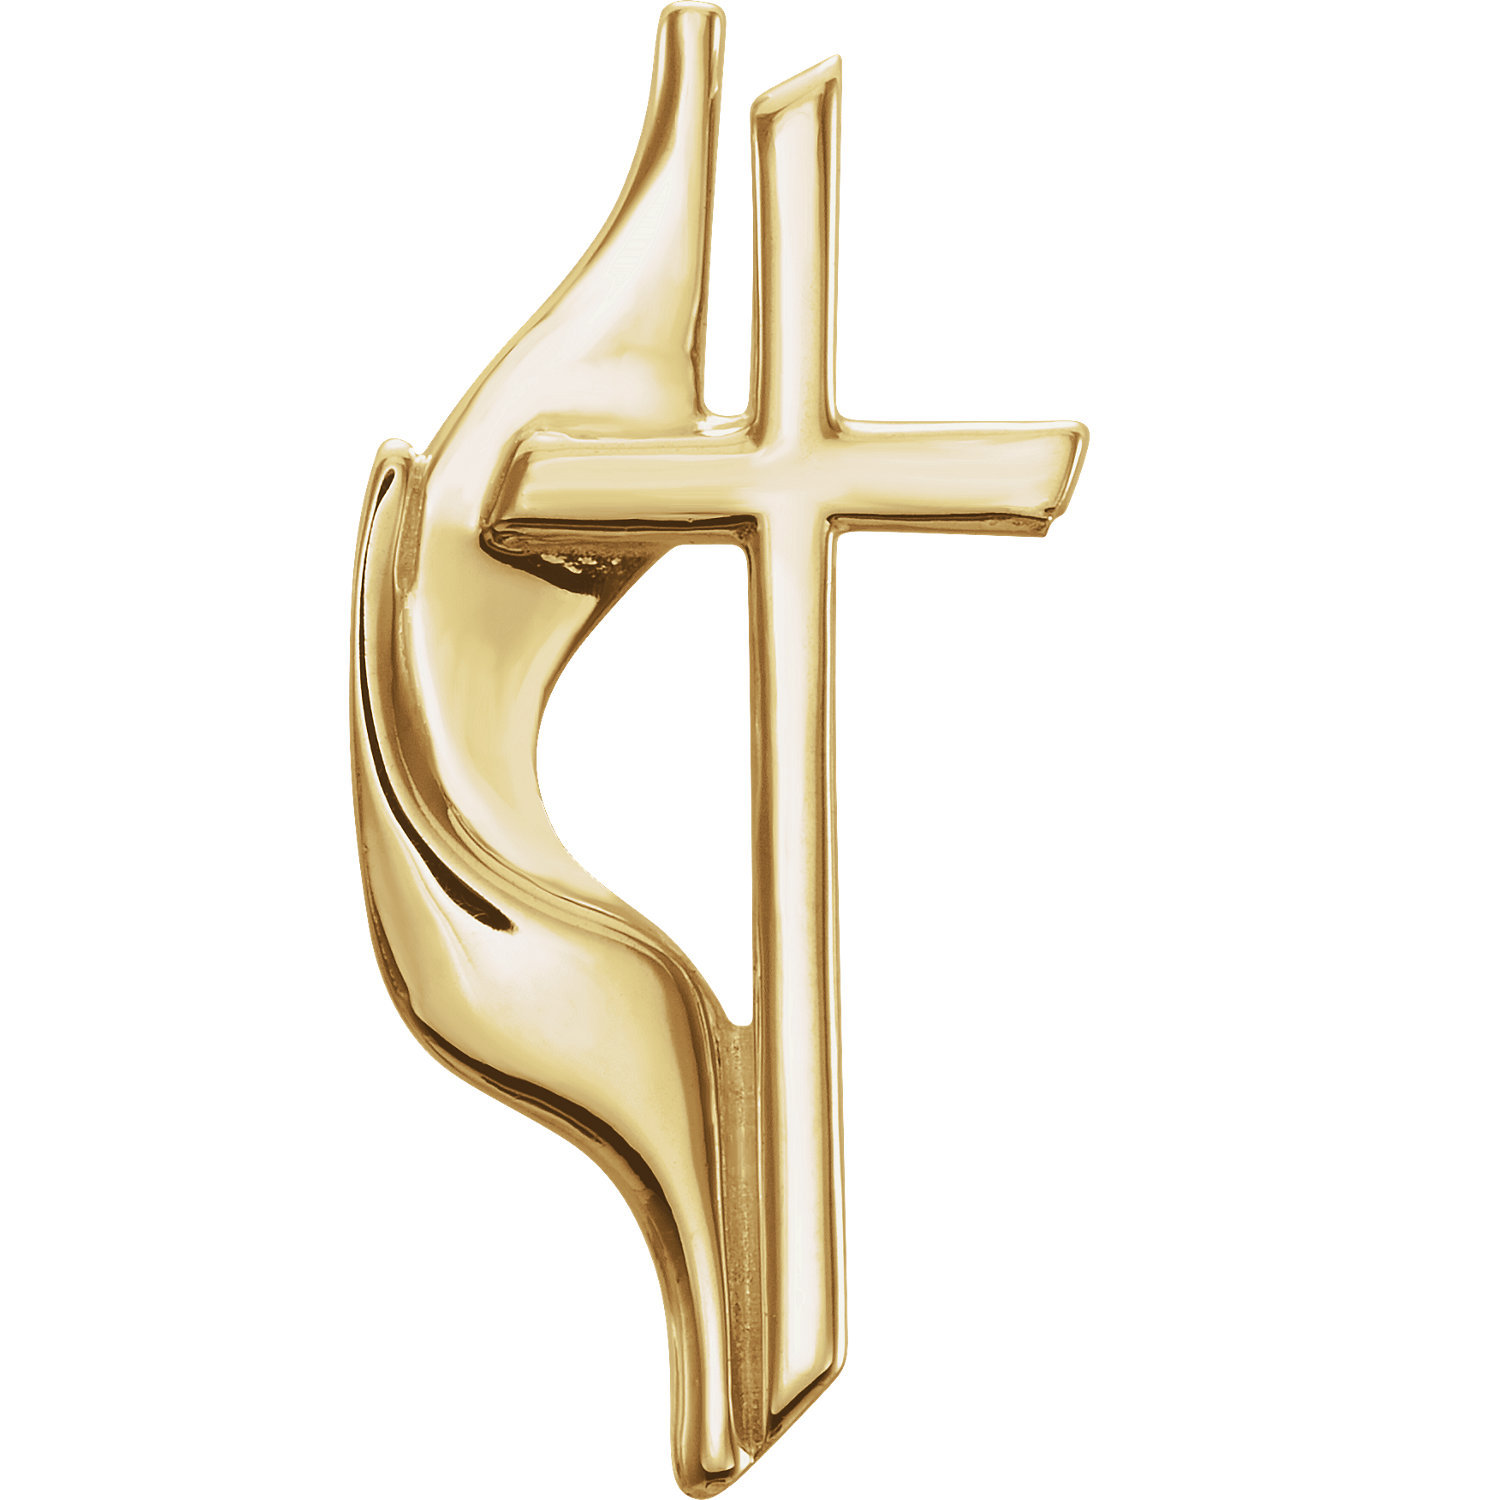 14K Gold Methodist Cross Lapel Pin - $200.99 - $339.99